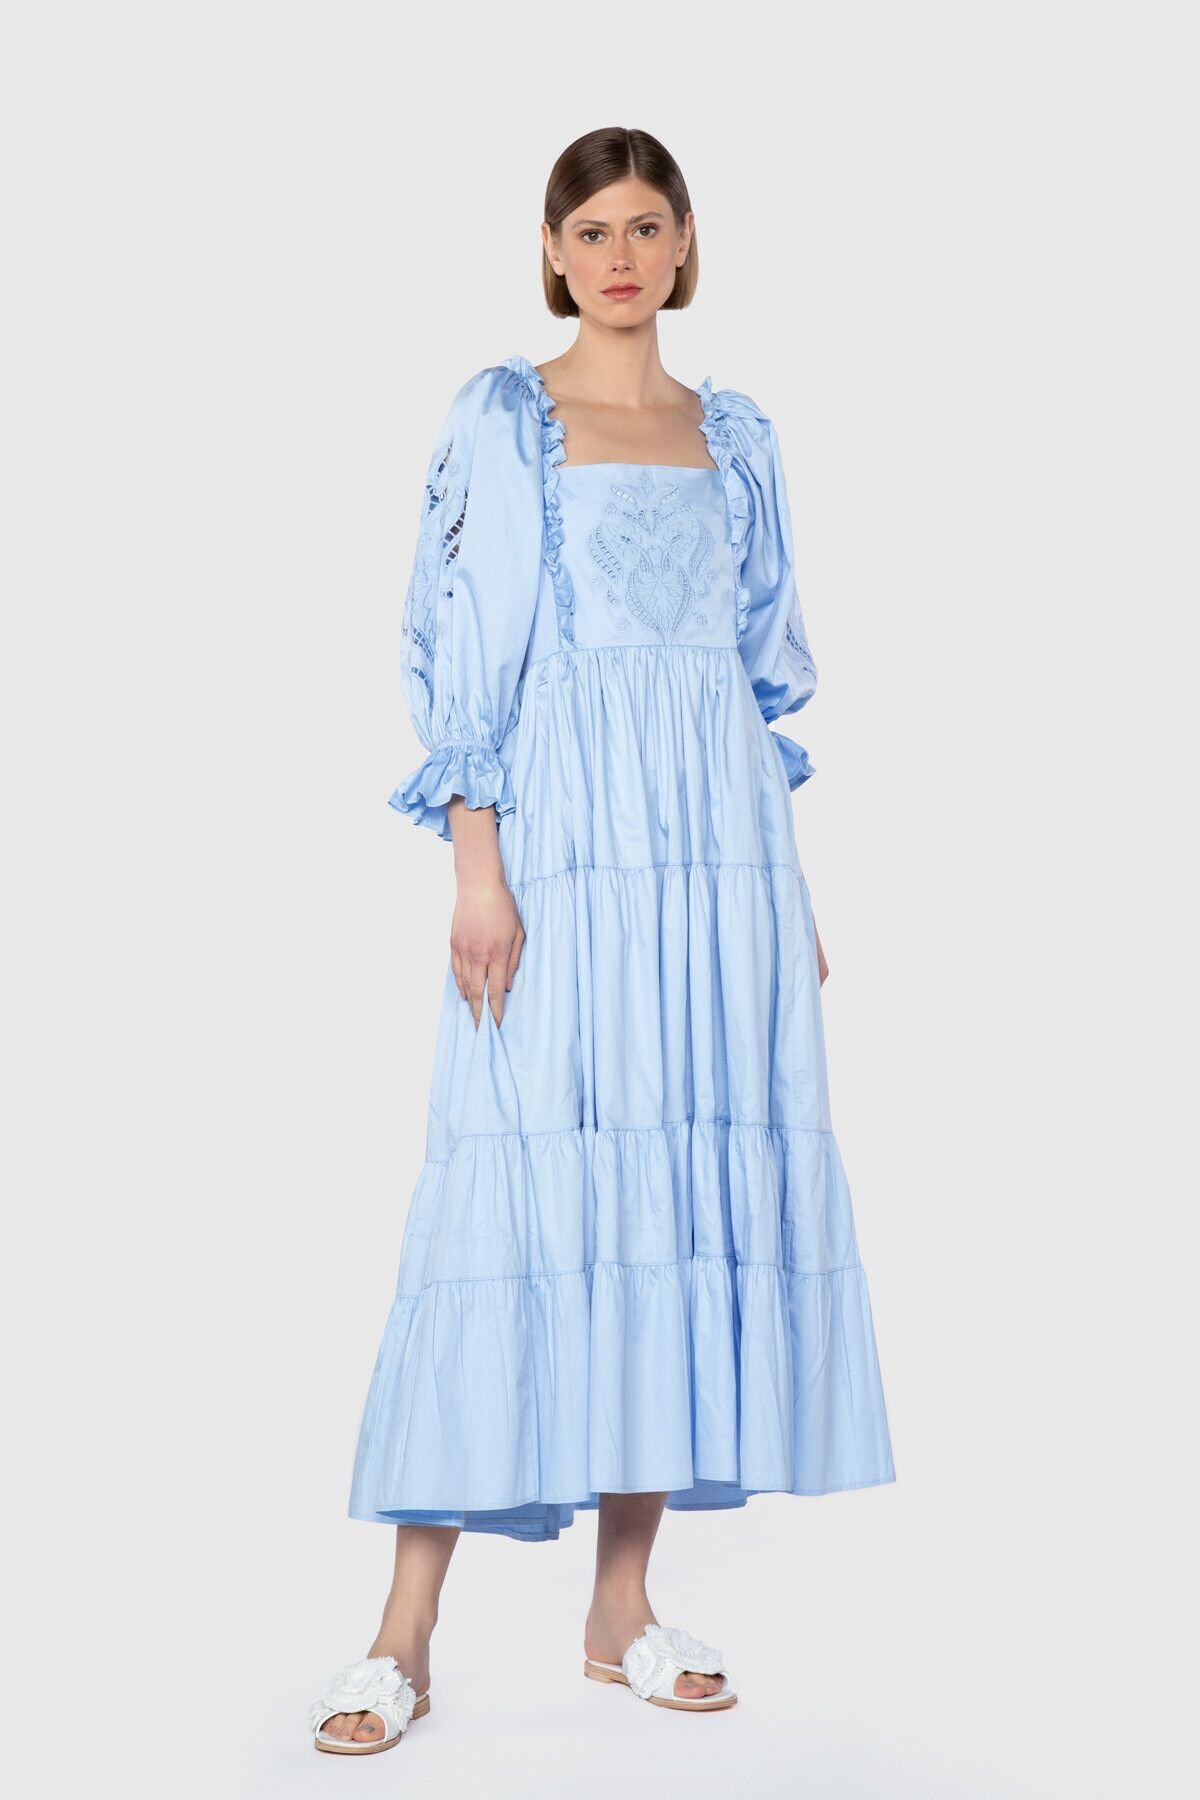 Voluminous Sleeve Ankle-Length Blue Dress